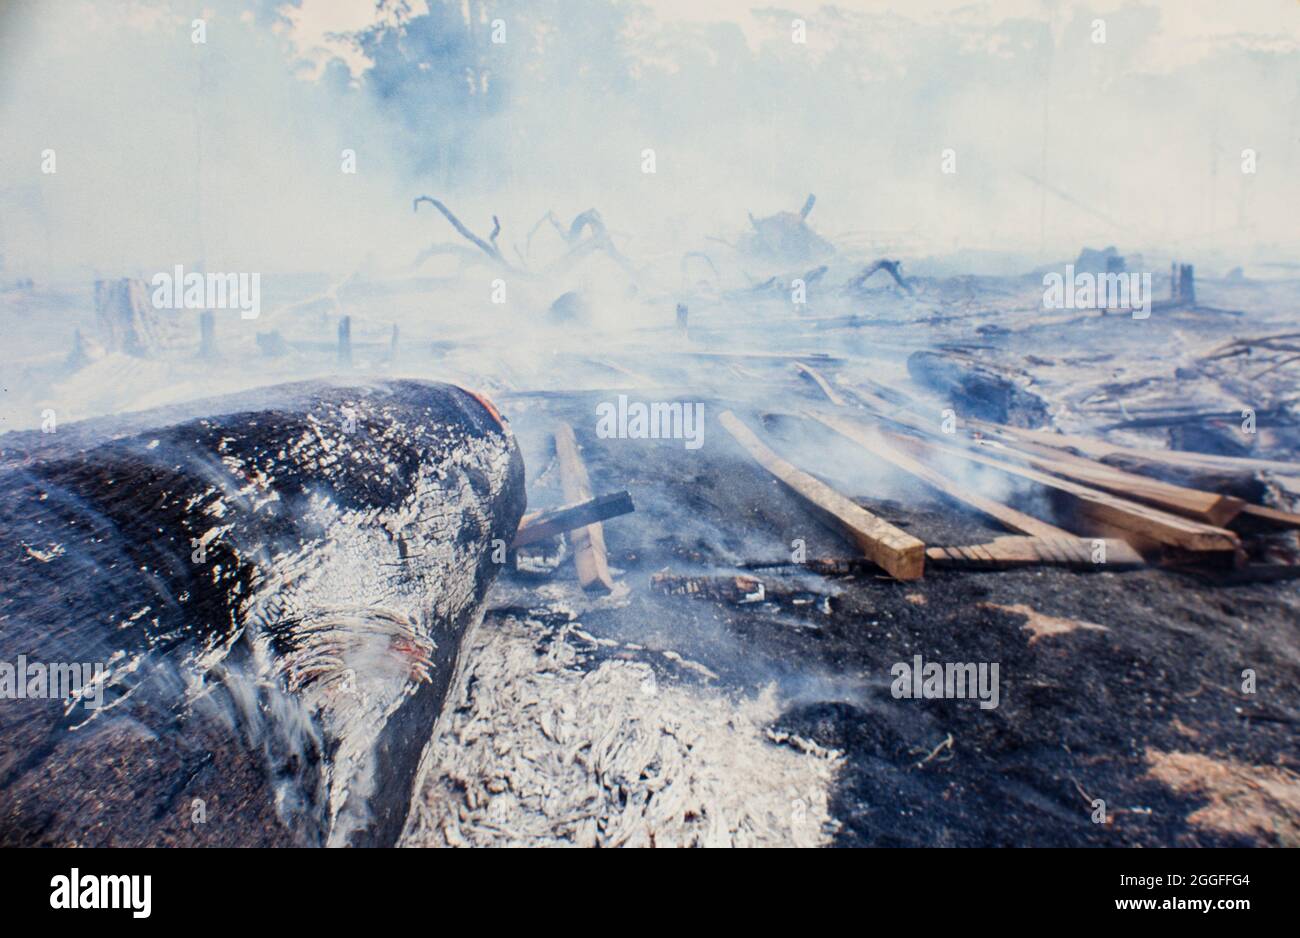 Amazon rainforest burning, deforestation for livestock. Stock Photo